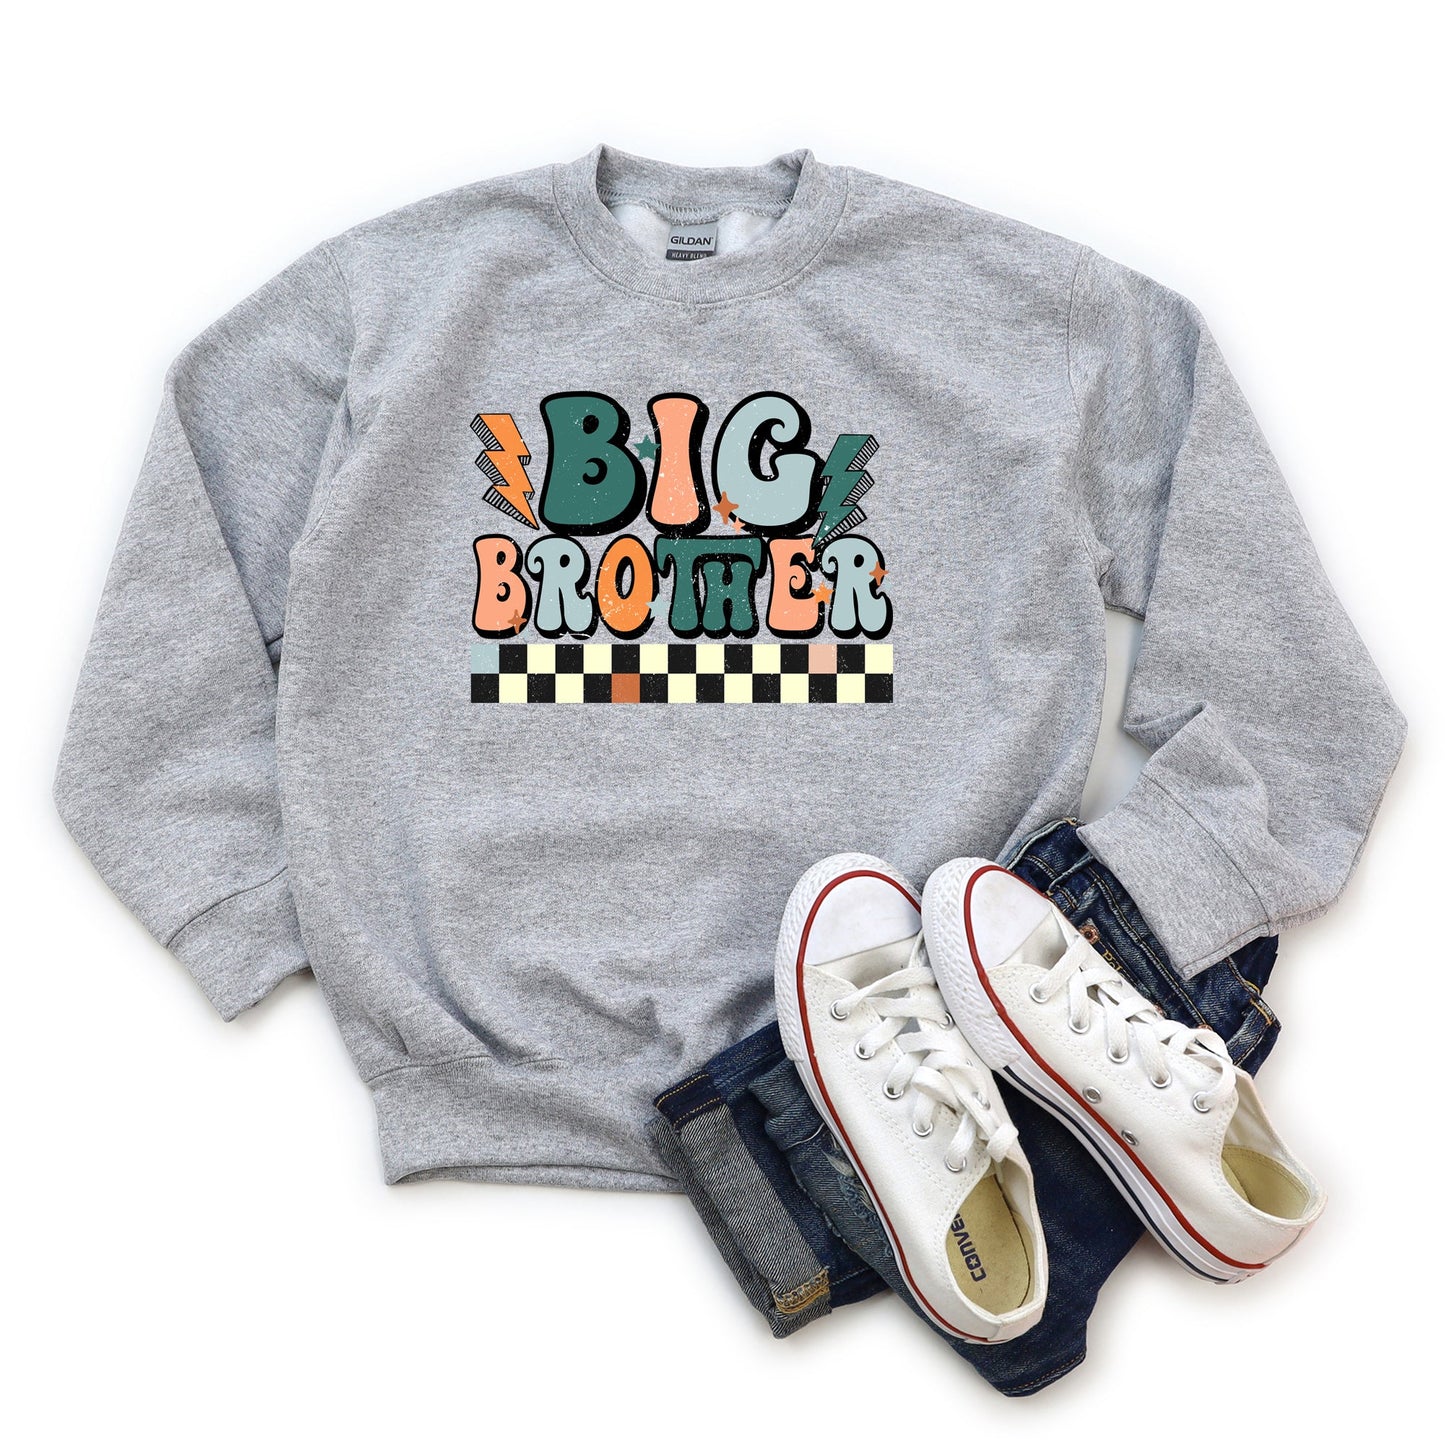 Big Brother Checkered | Youth Graphic Sweatshirt